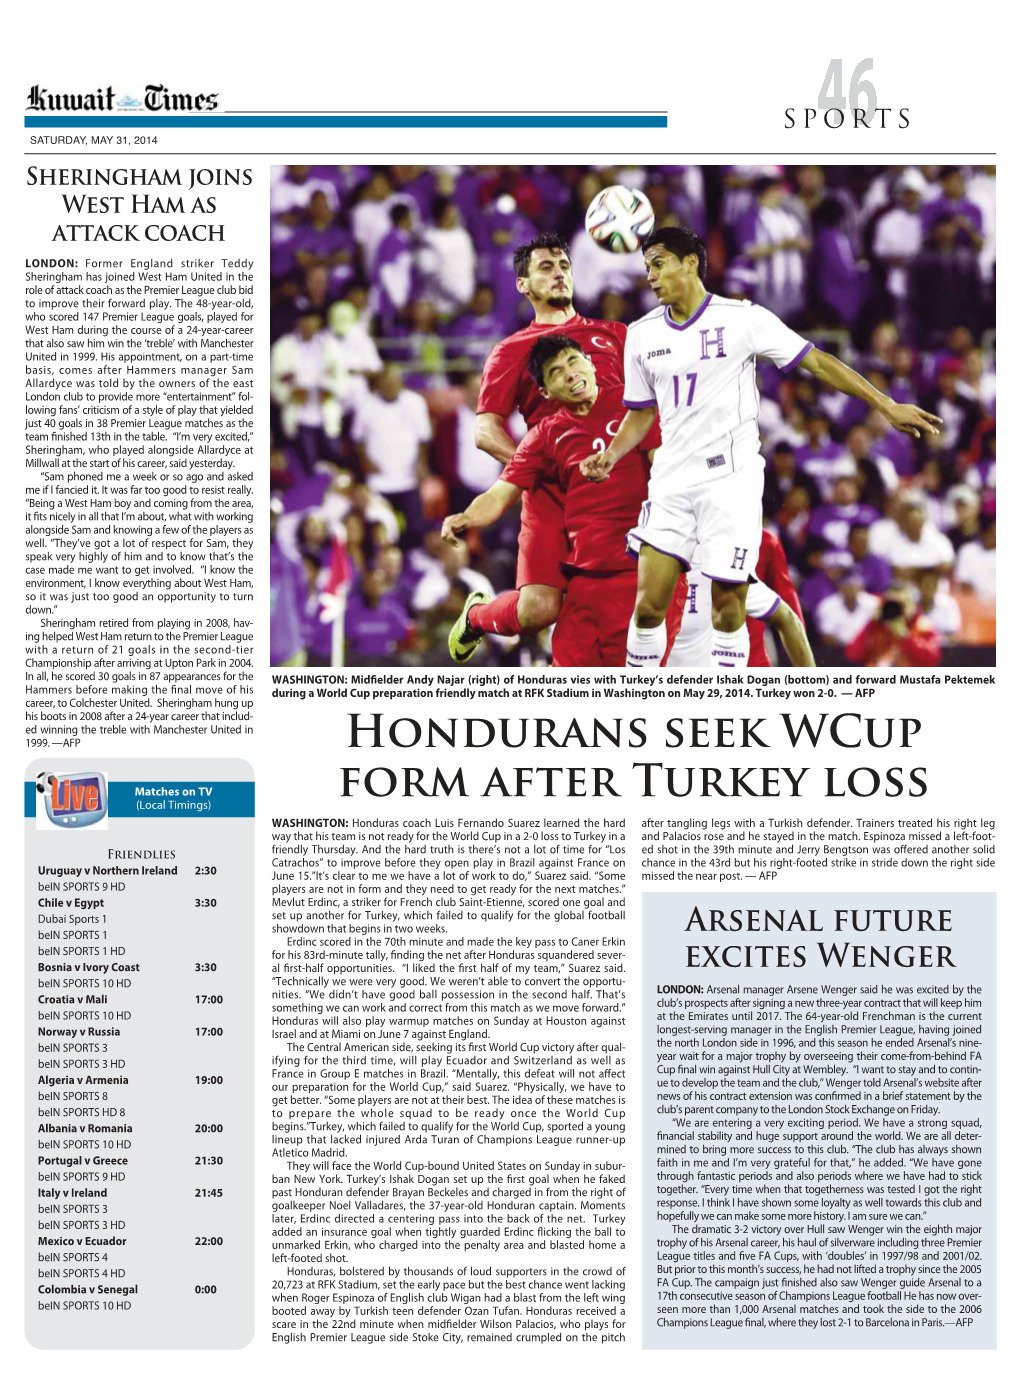 Hondurans Seek WCUP FORM After Turkey Loss